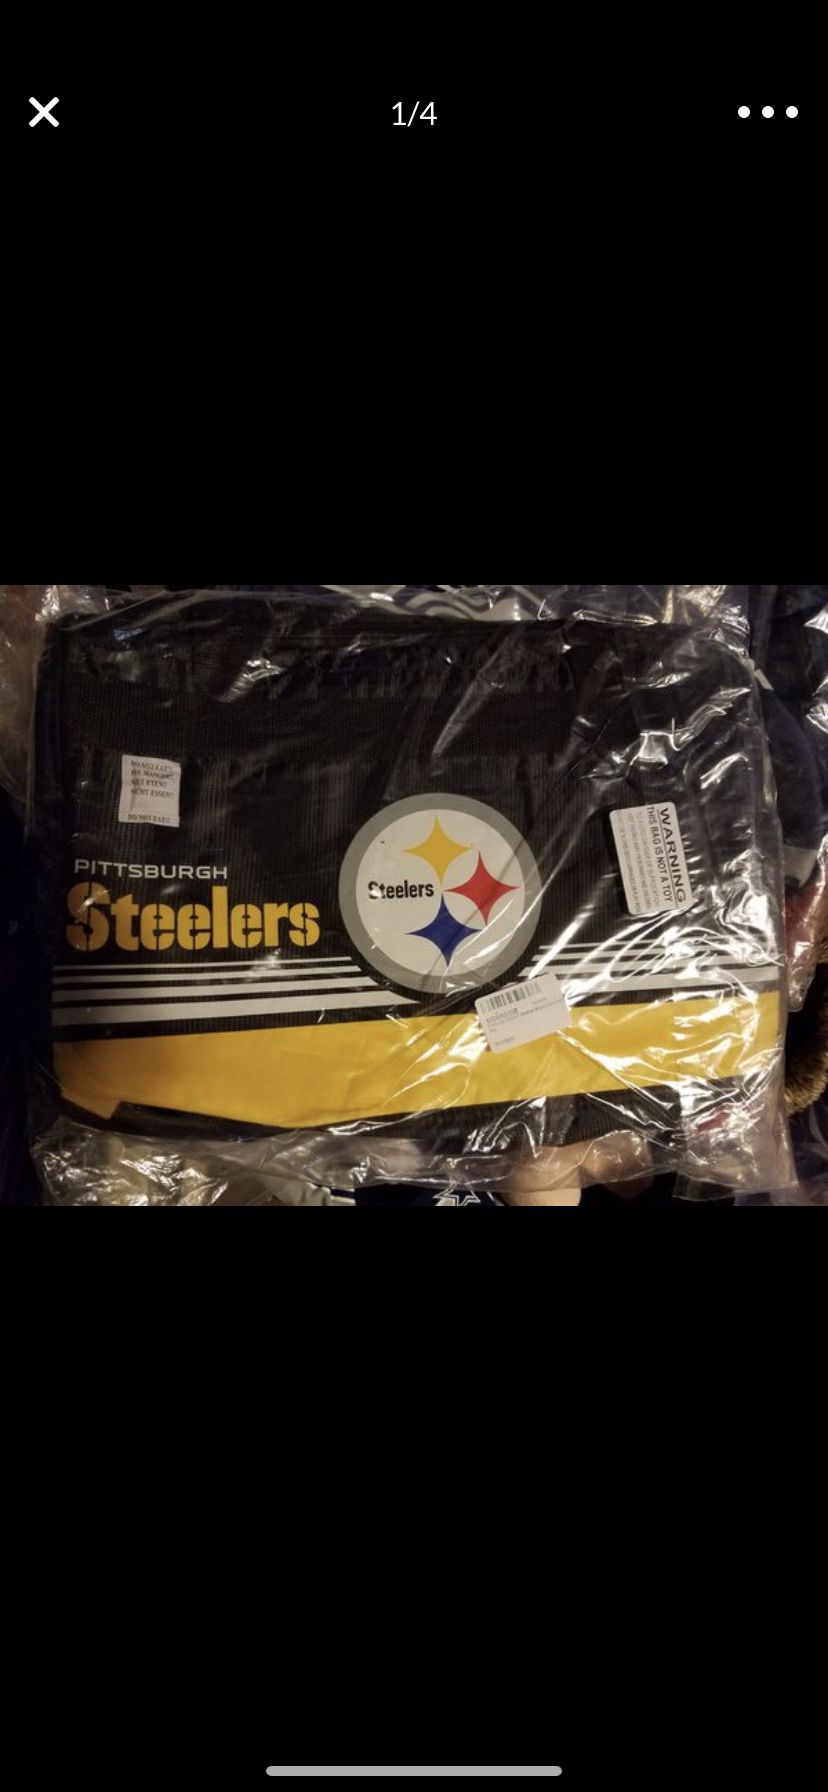 Pittsburgh Steelers duffle bag